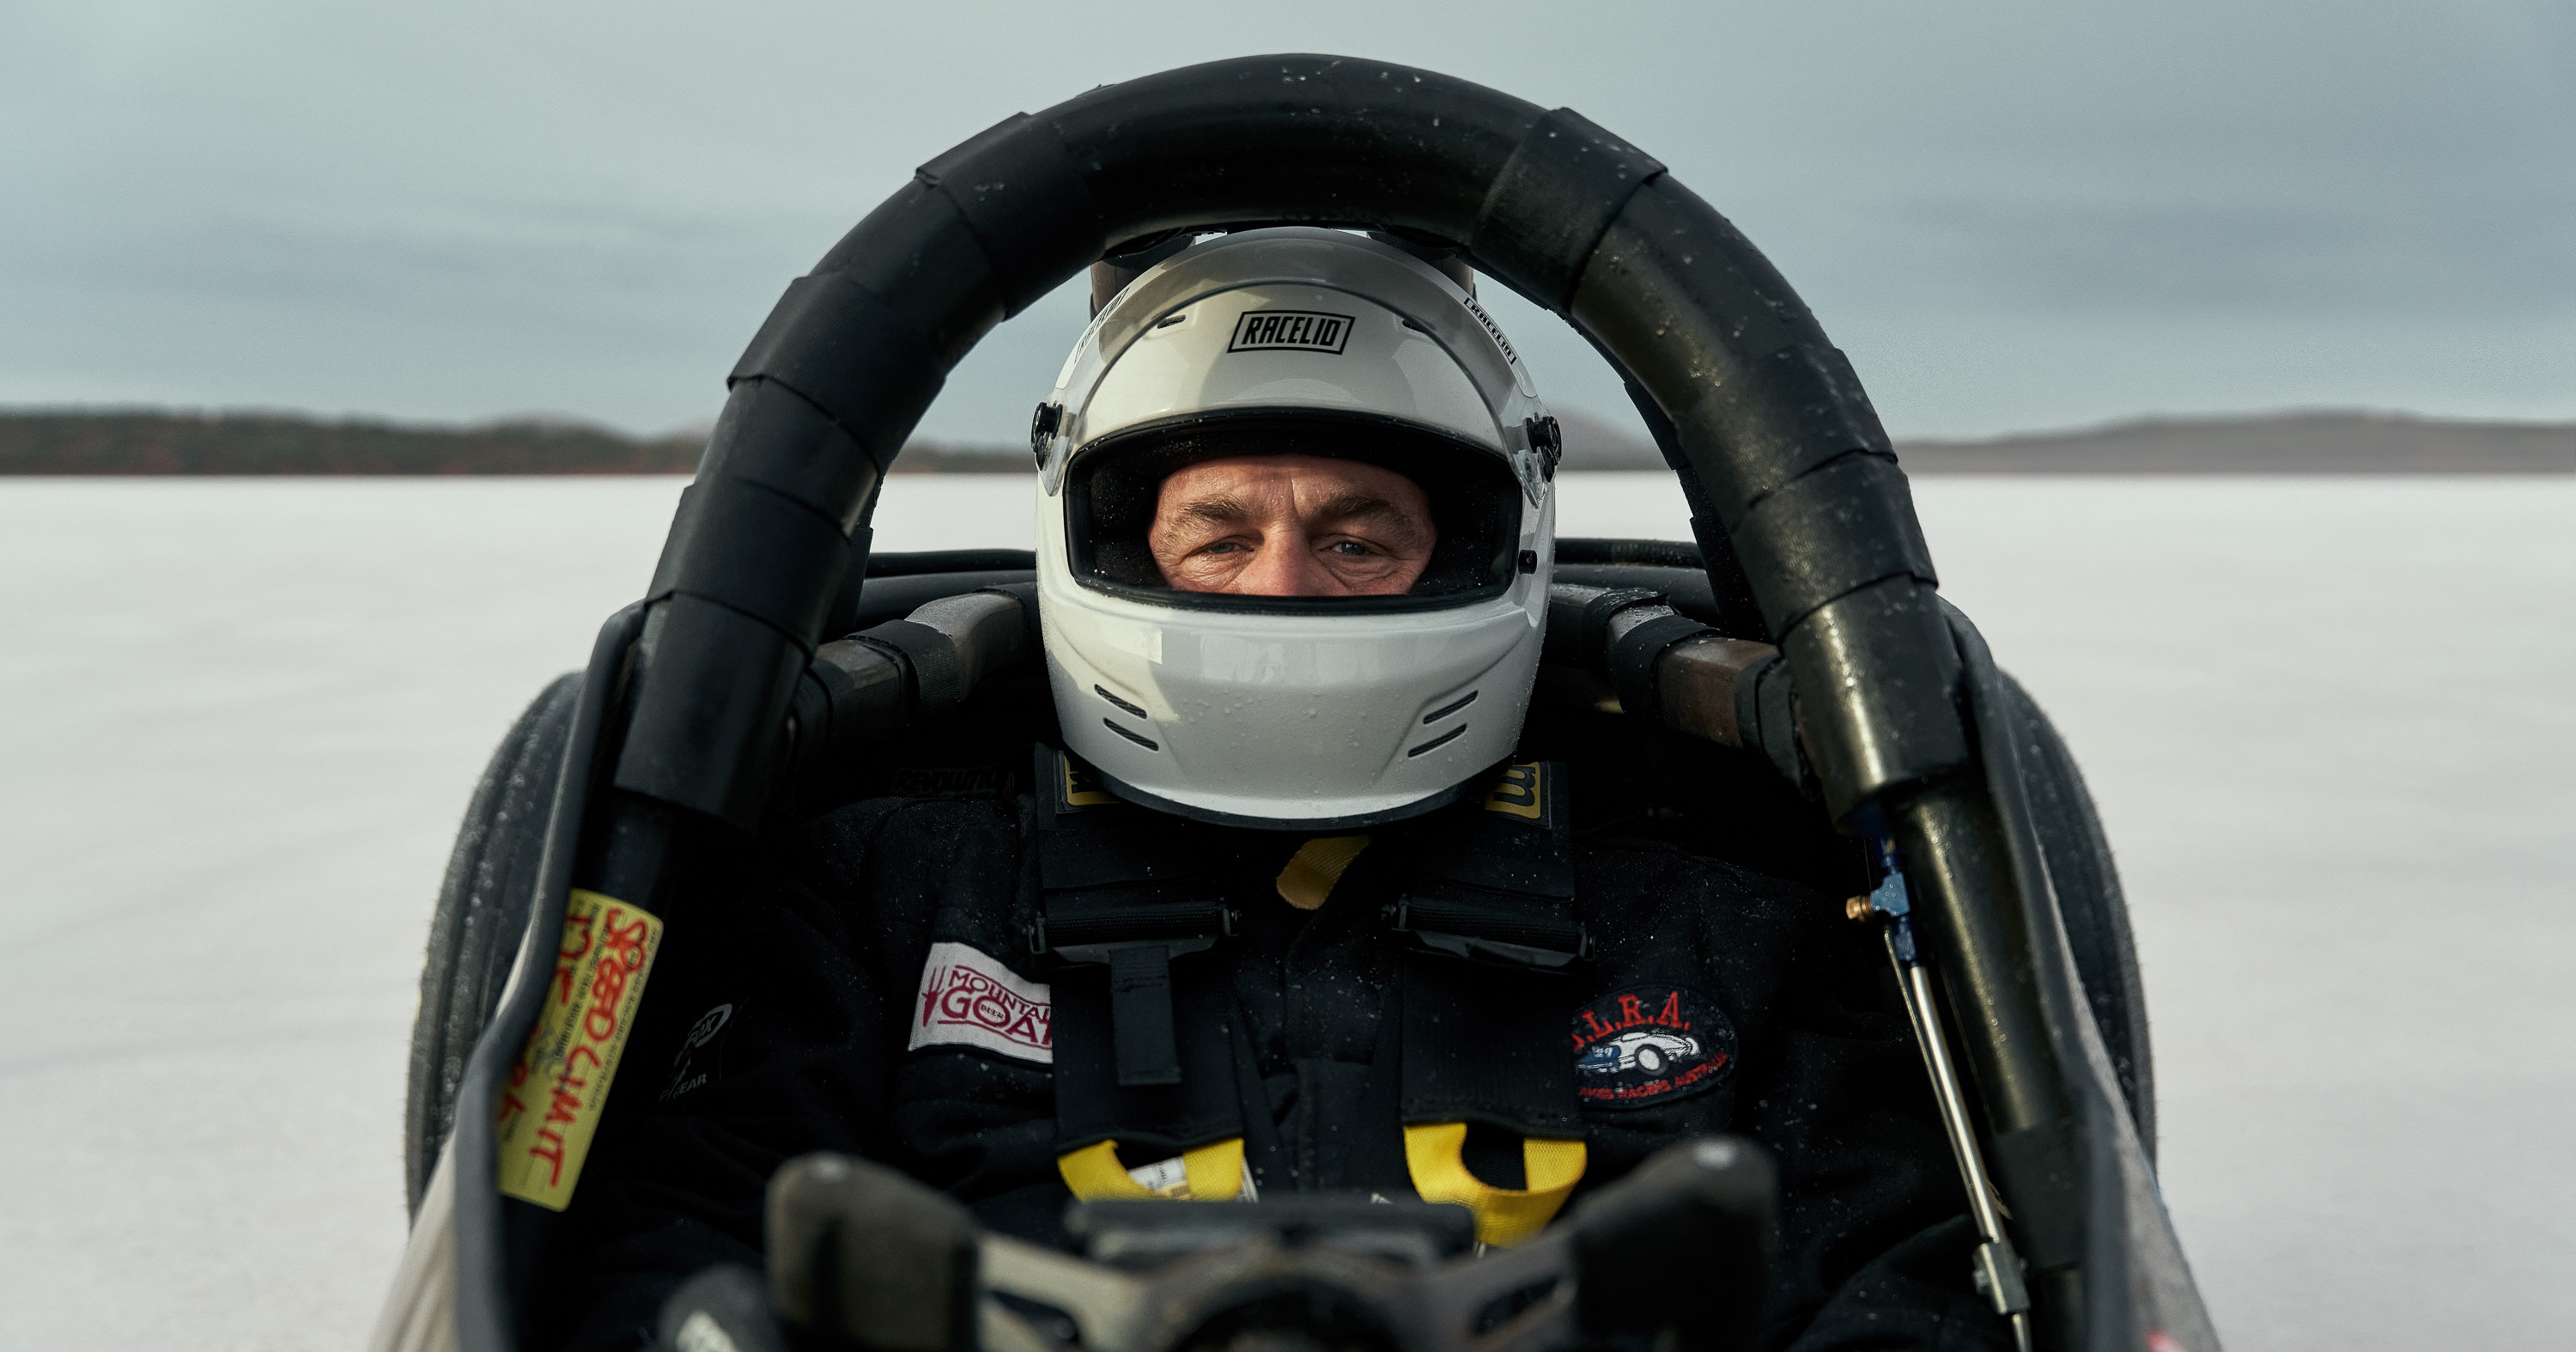 A man wearing a helmet sitting inside a racecar